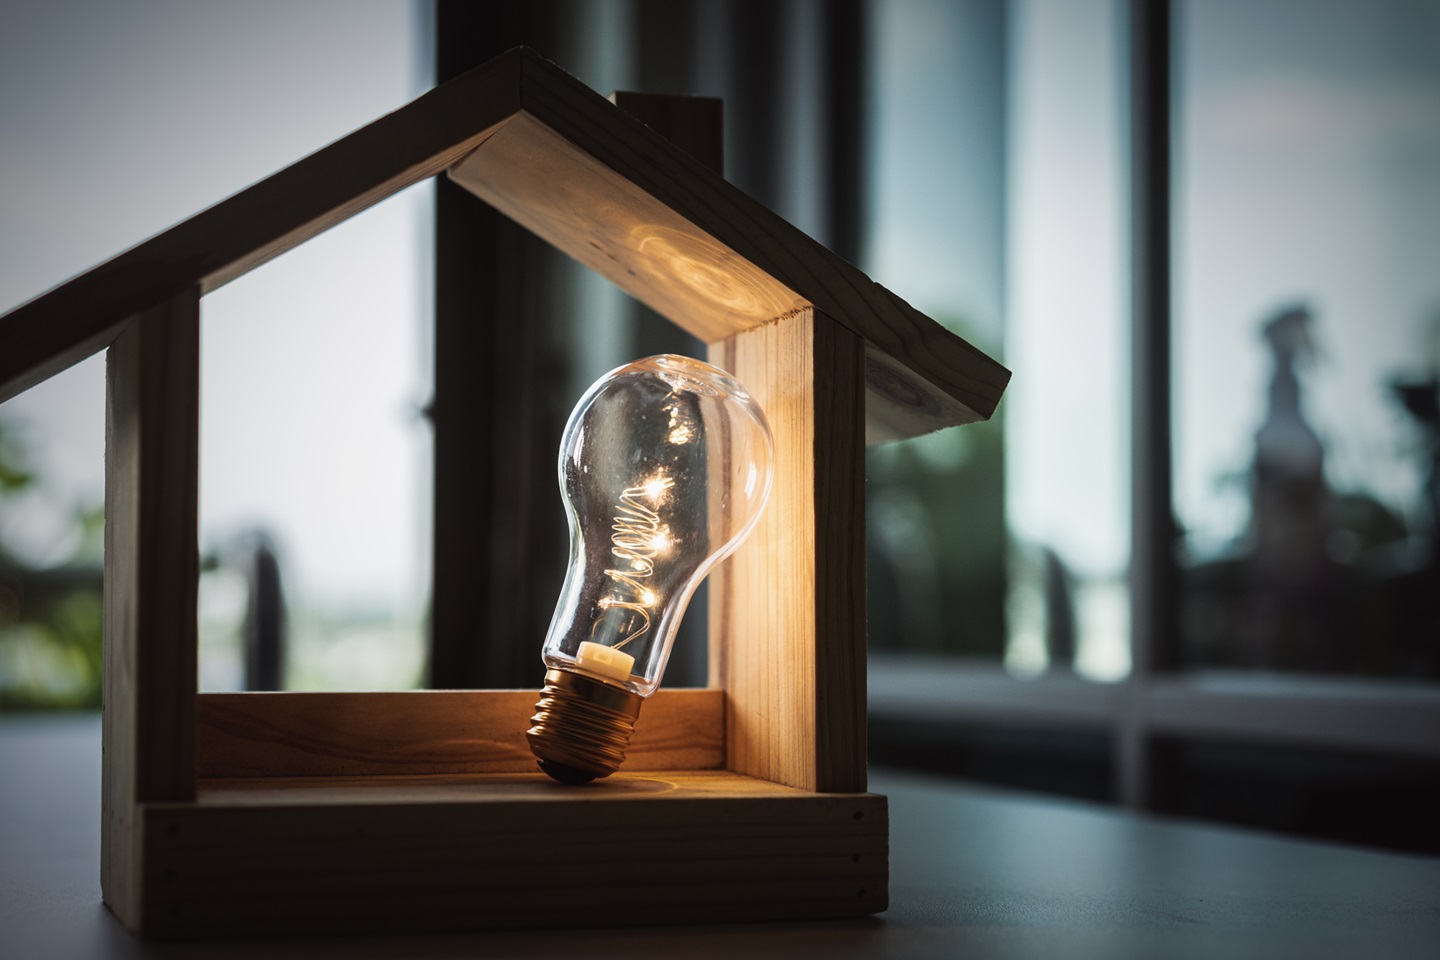 Lit up lightbulb inside a model of a house